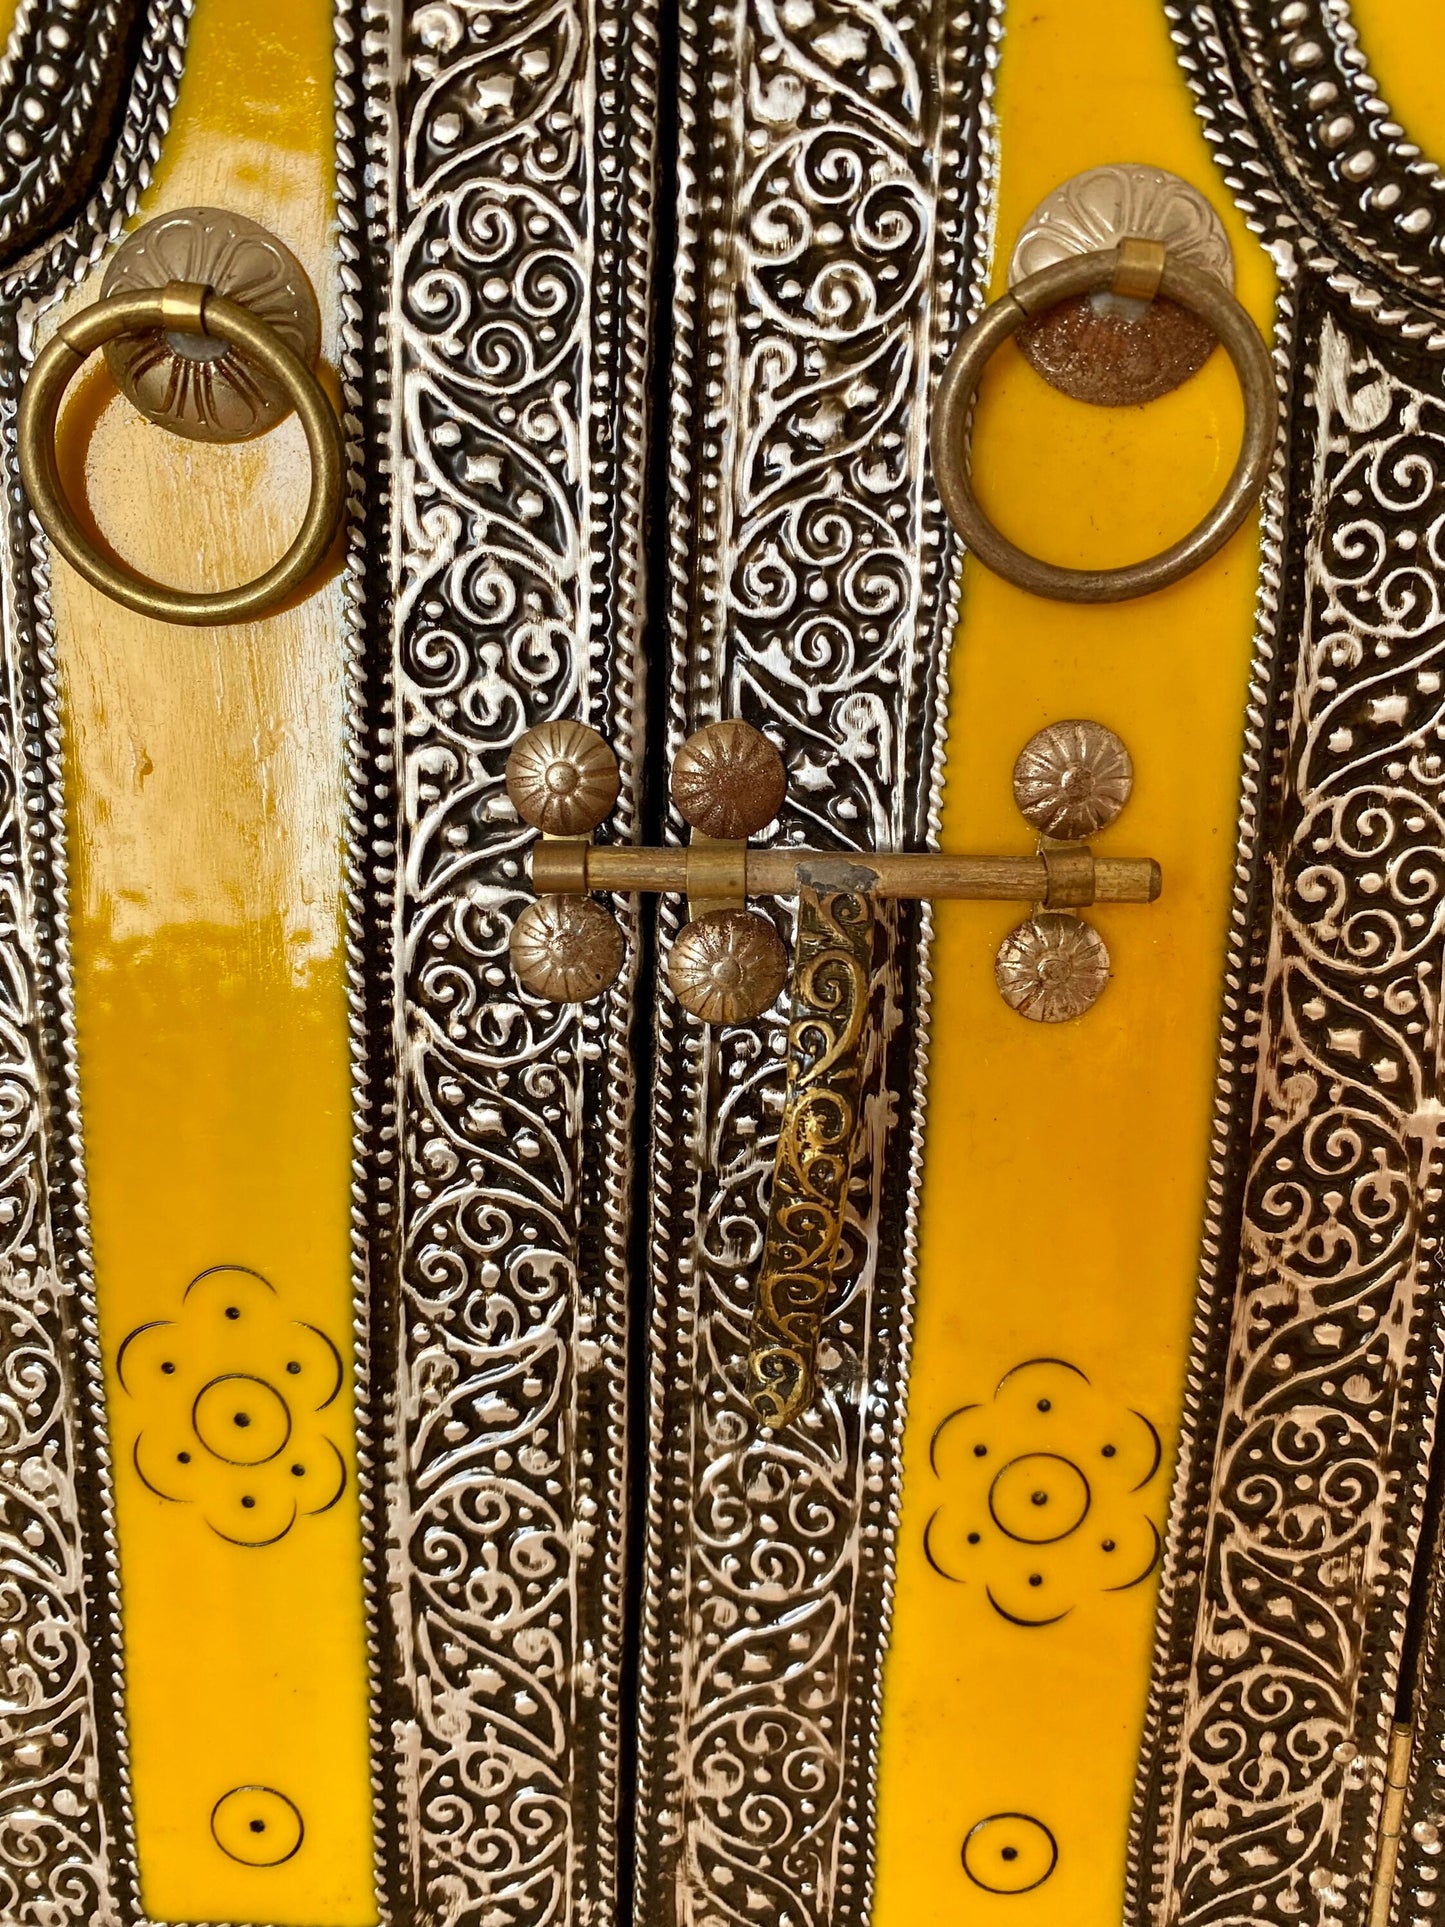 16"x10" Moroccan Metal Mirror Geometric pattern mirror,Exotic Artisanal Wall mirror,Handmade Unique Decorative Copper metal wall mirror